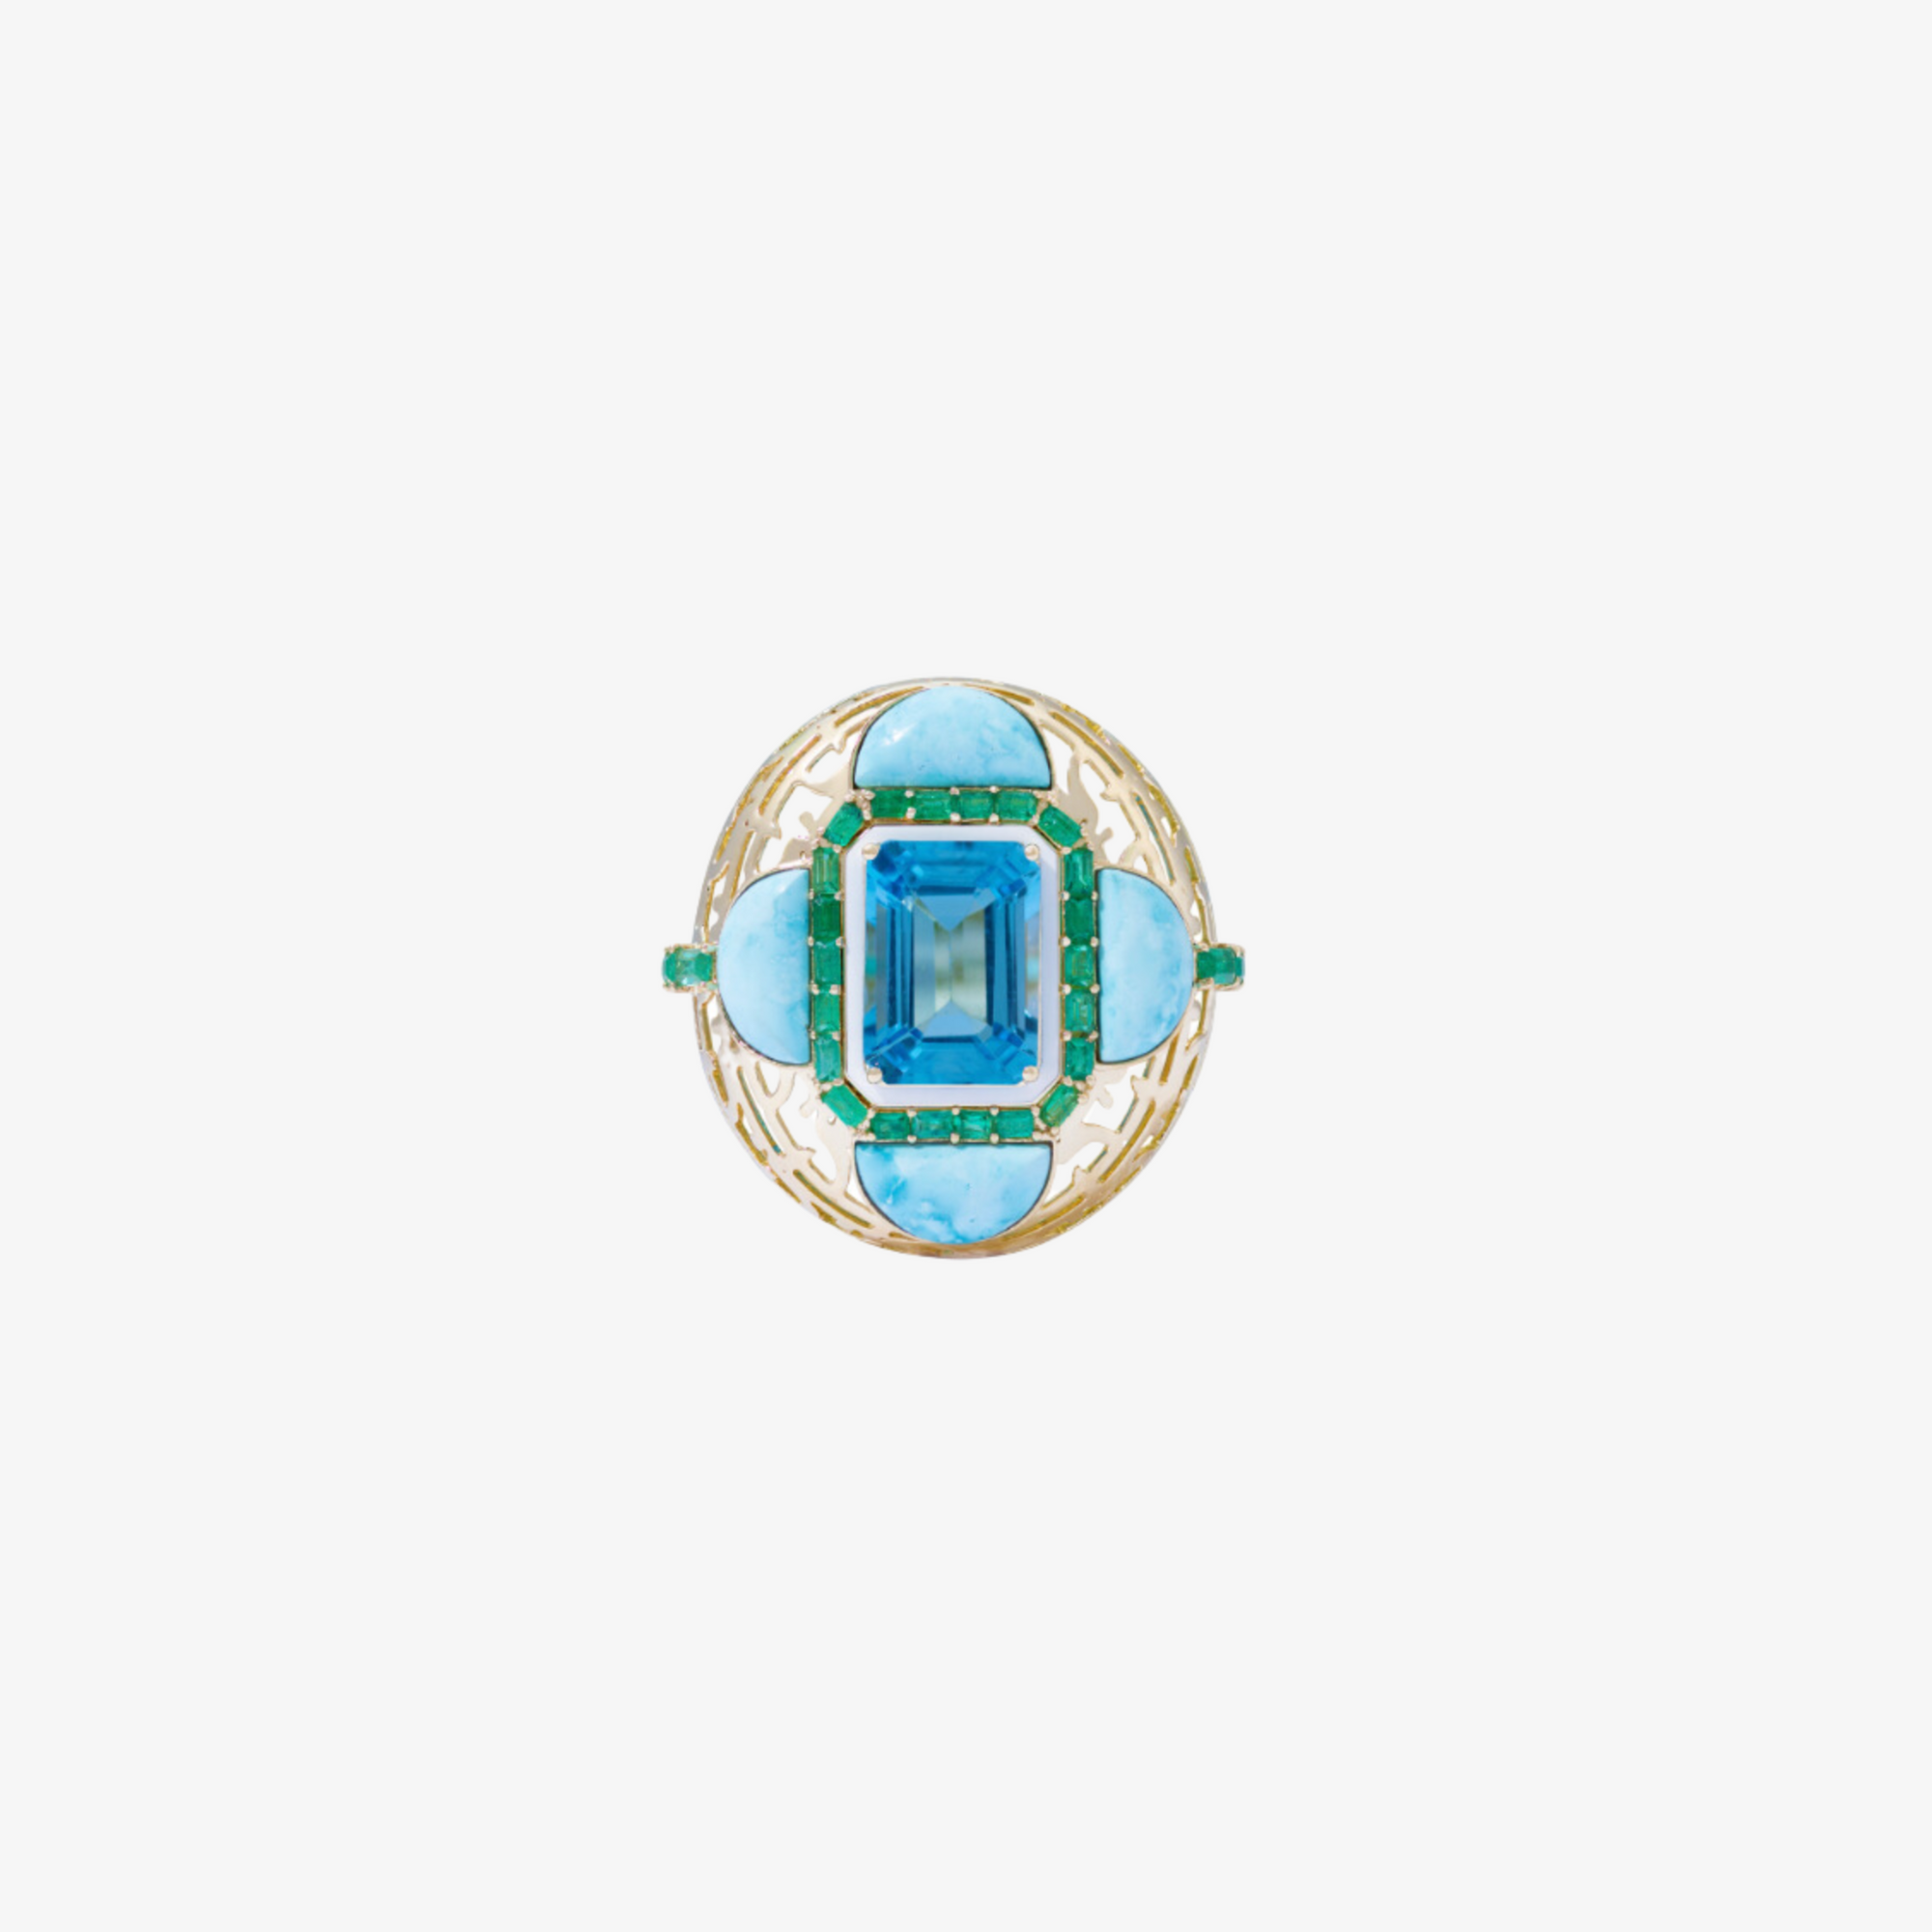 HAWA - 18K Gold, Turquoise, Aquamarine & Emerald Ring